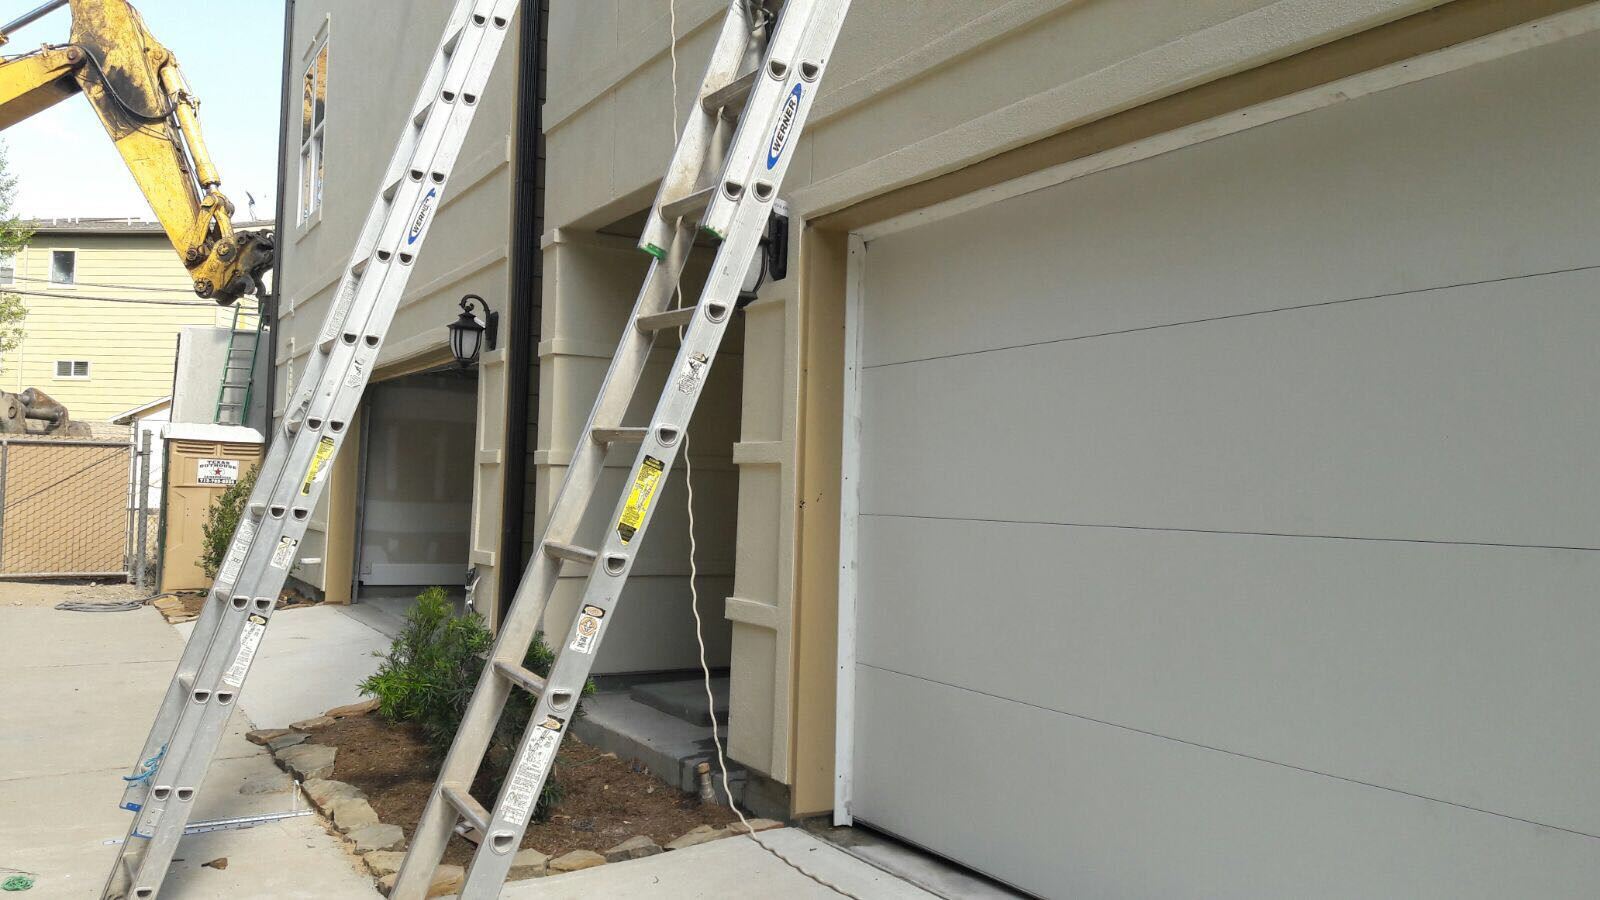 Best ideas about DIY Garage Door Repairs
. Save or Pin Why Garage Door Repairs Should Be Left to the Pros Home Now.